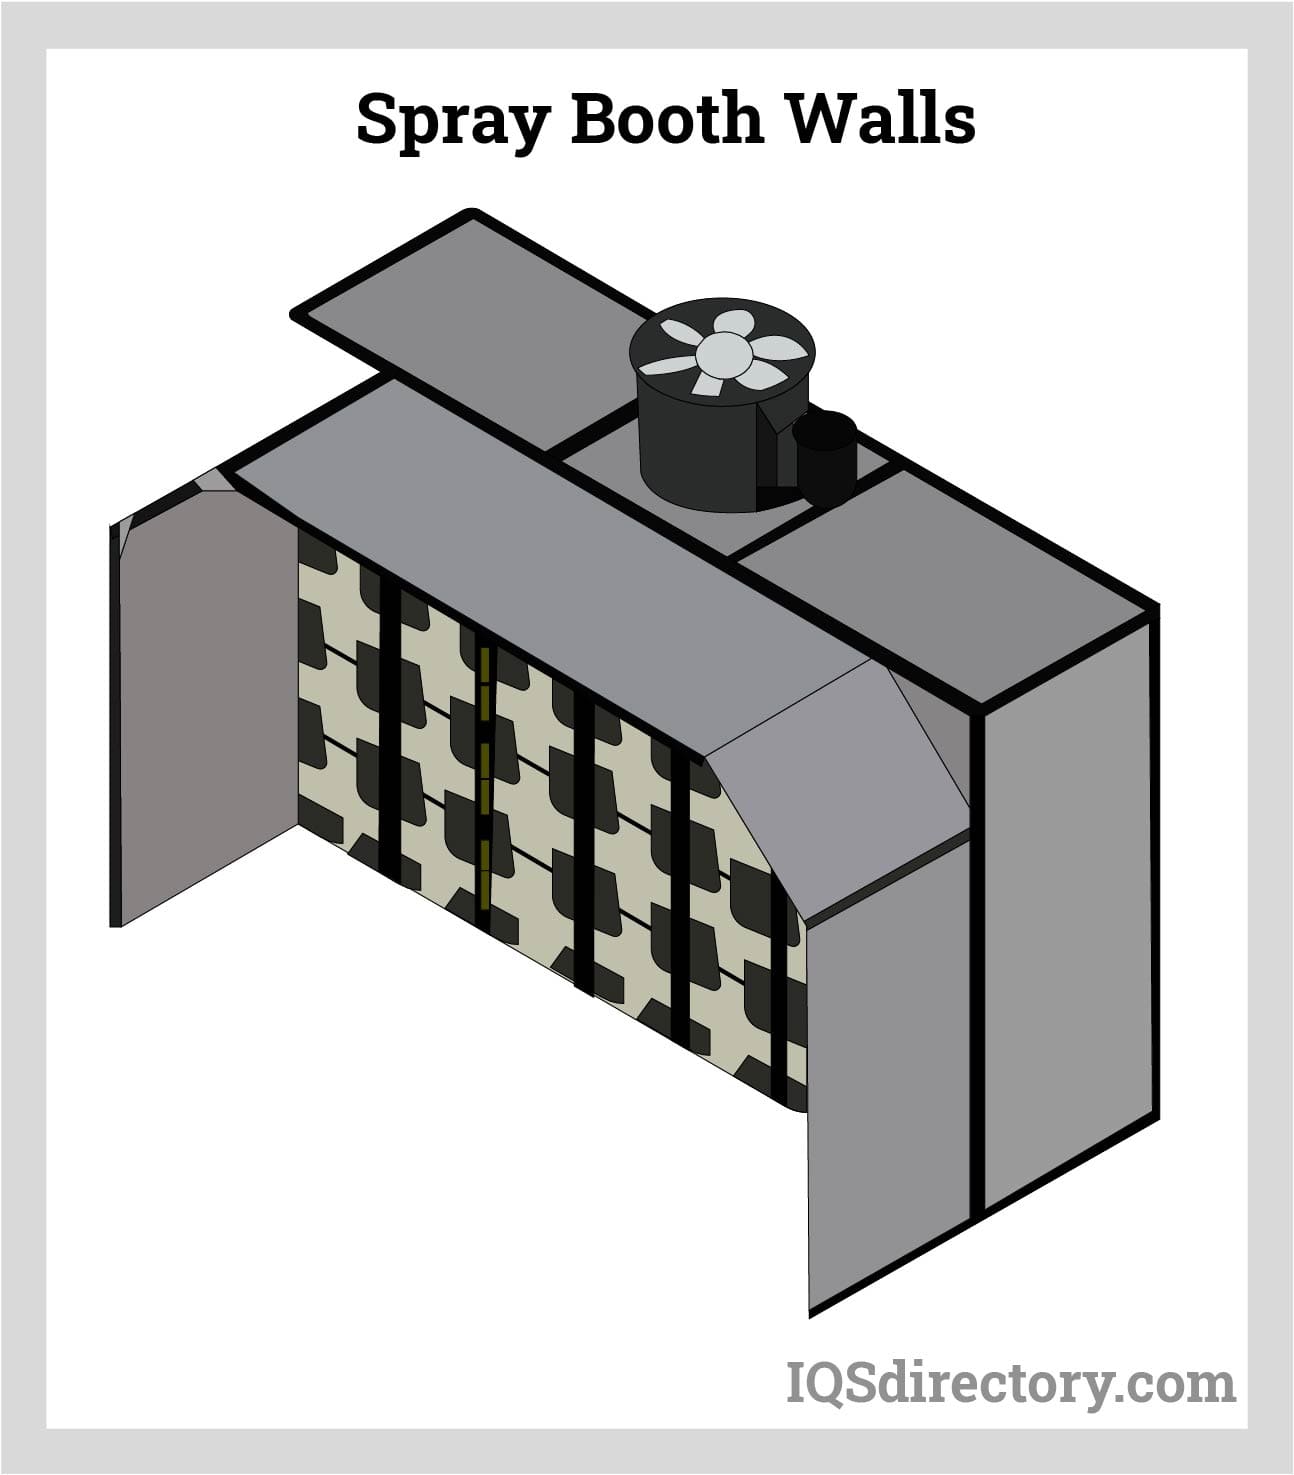 Spray Booth Walls